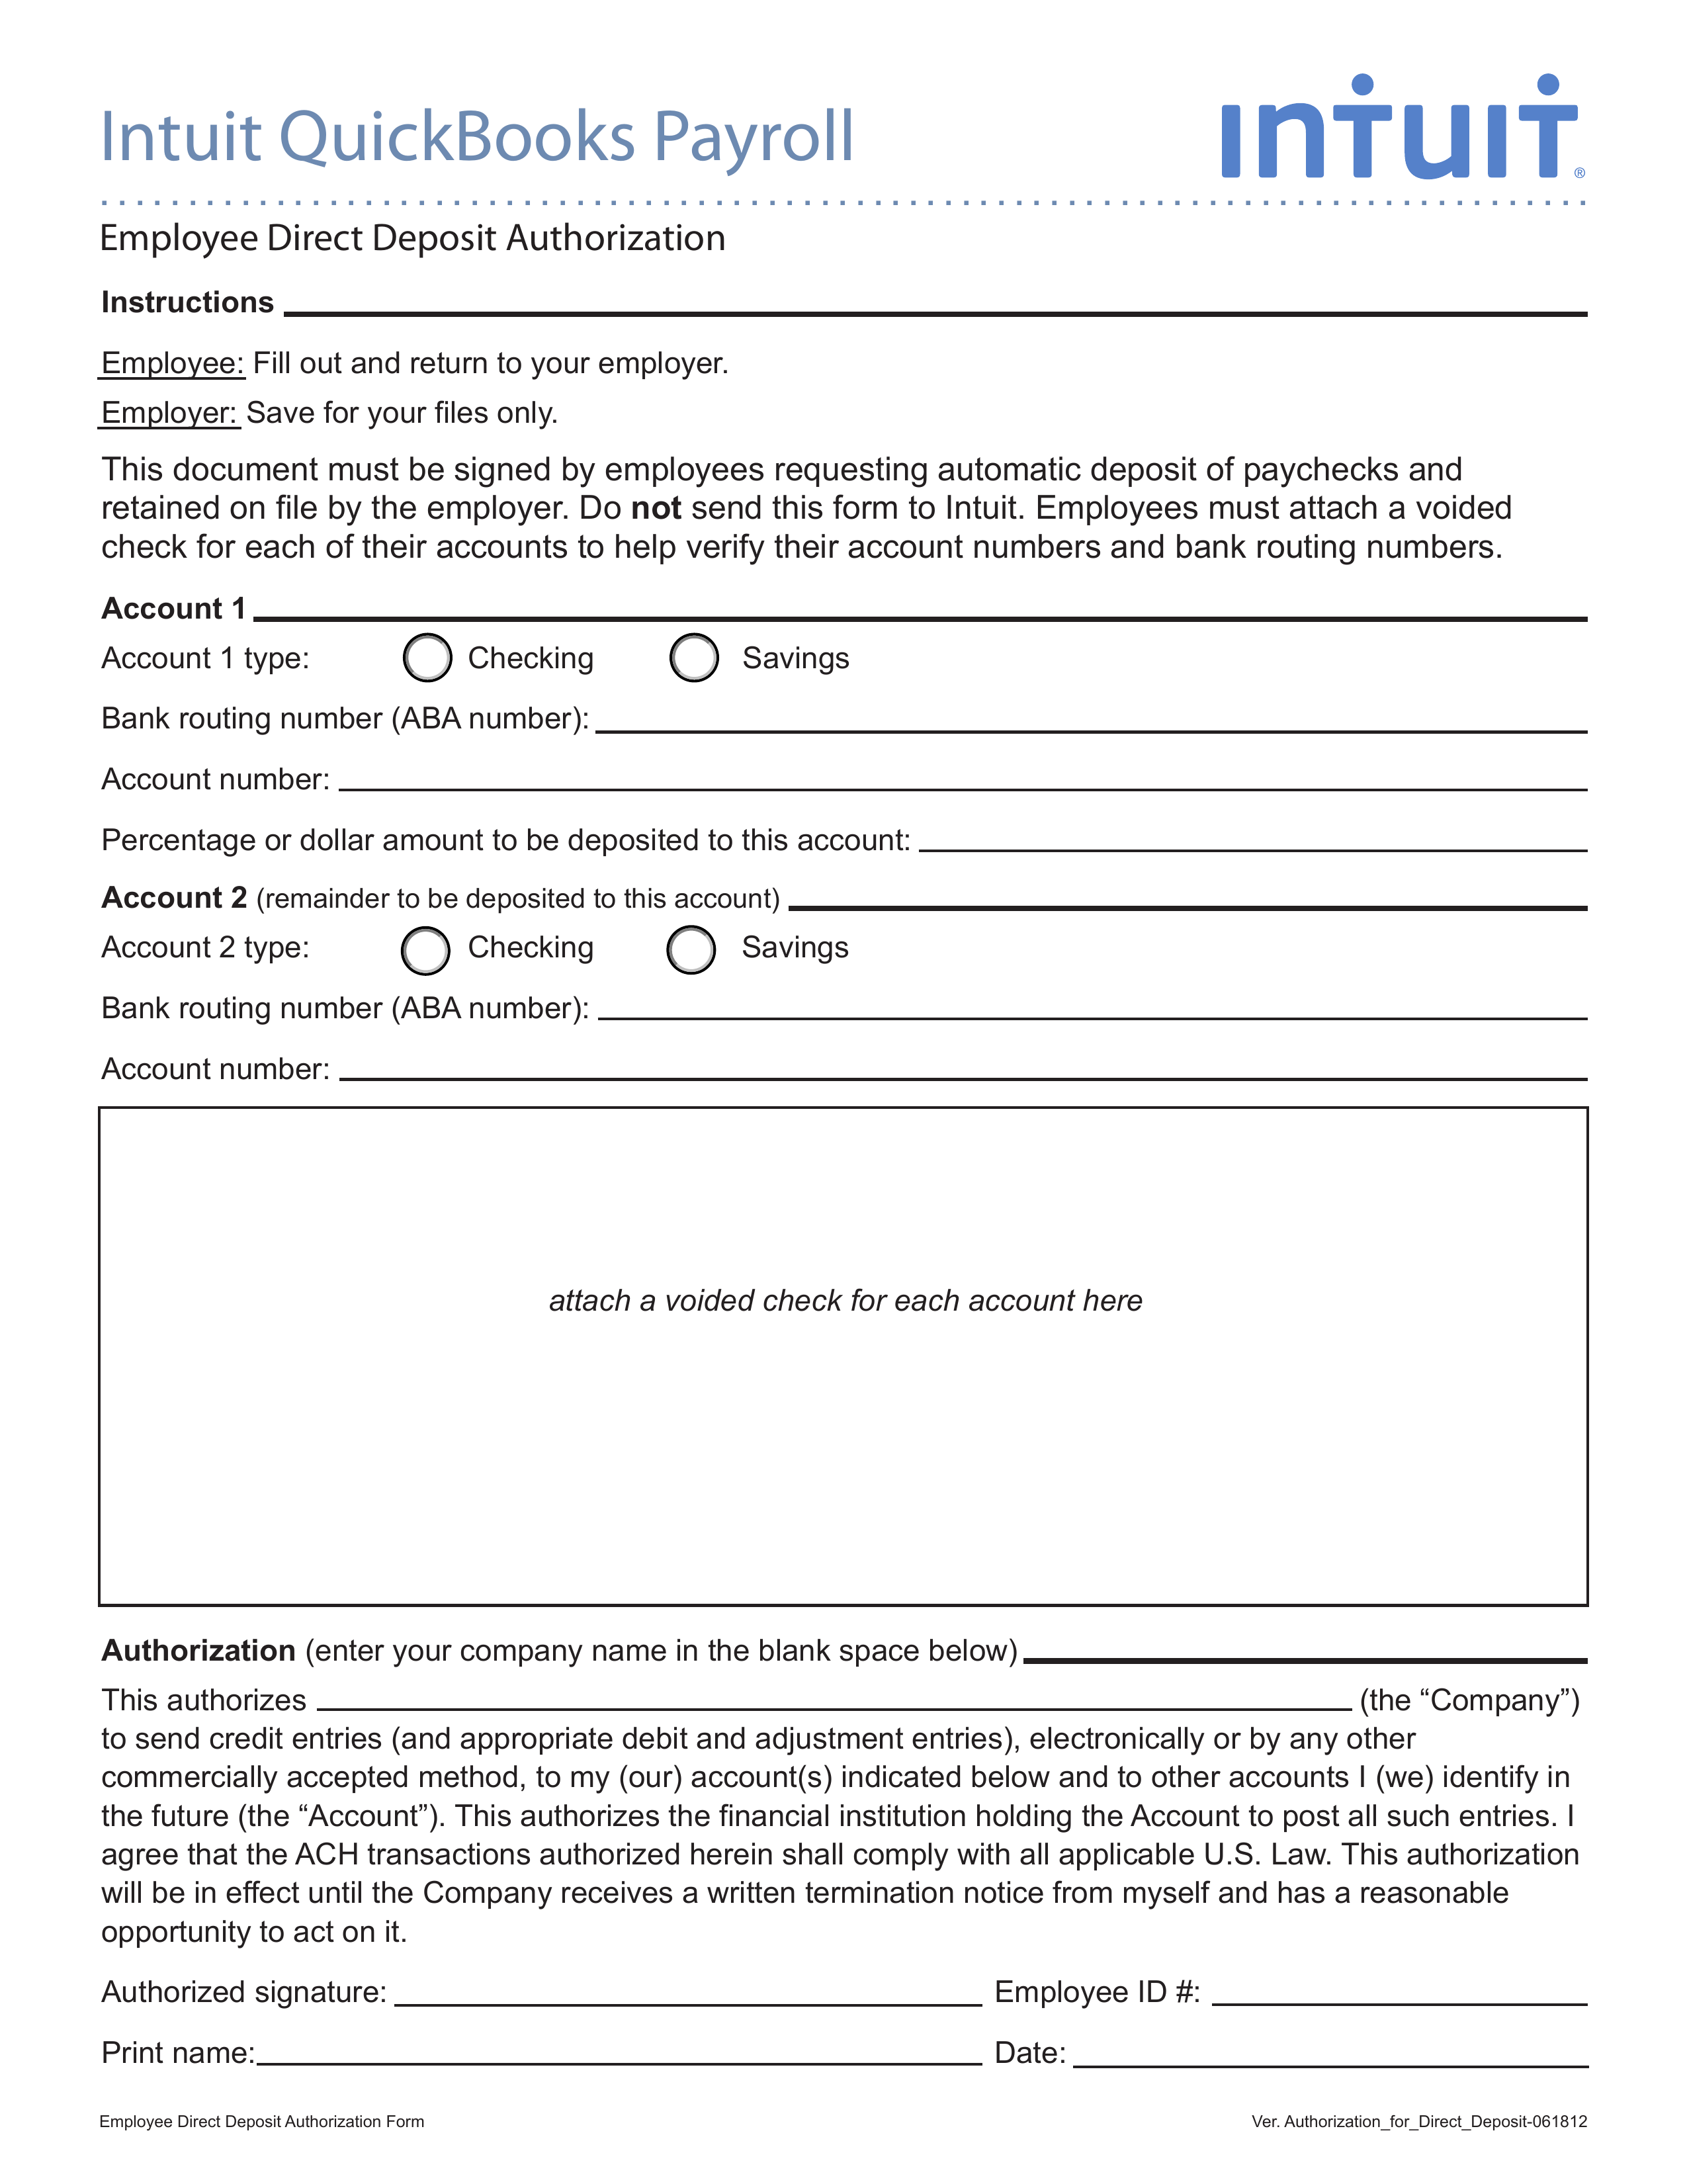 Free Intuit/Quickbooks Payroll Direct Deposit Form - PDF – eForms Within Employee Direct Deposit Enrollment Form Template In Employee Direct Deposit Enrollment Form Template